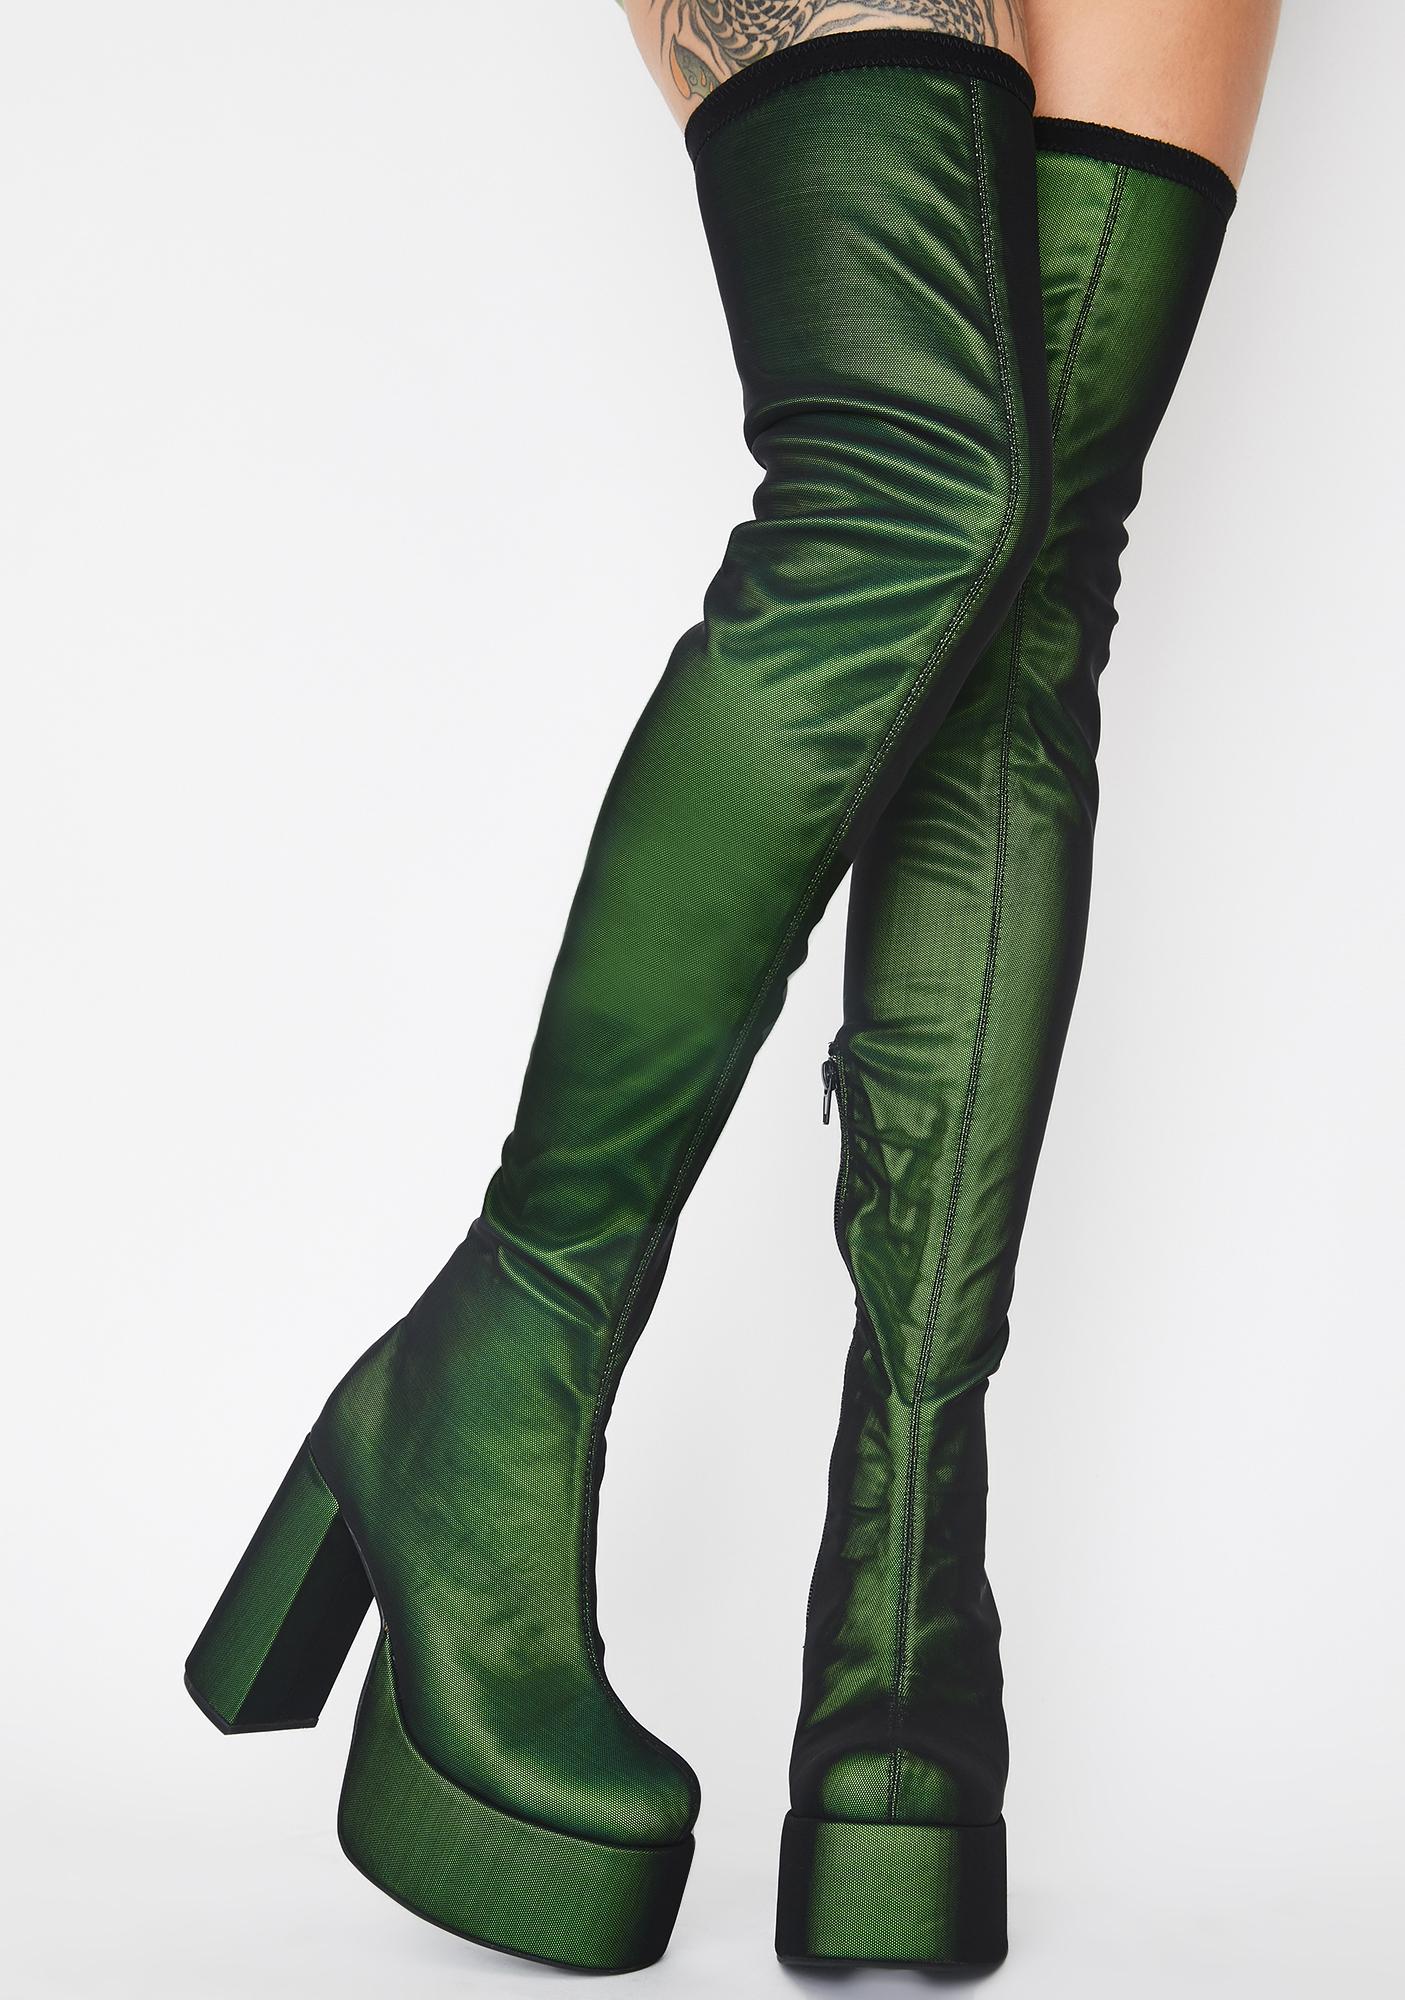 green thigh boots